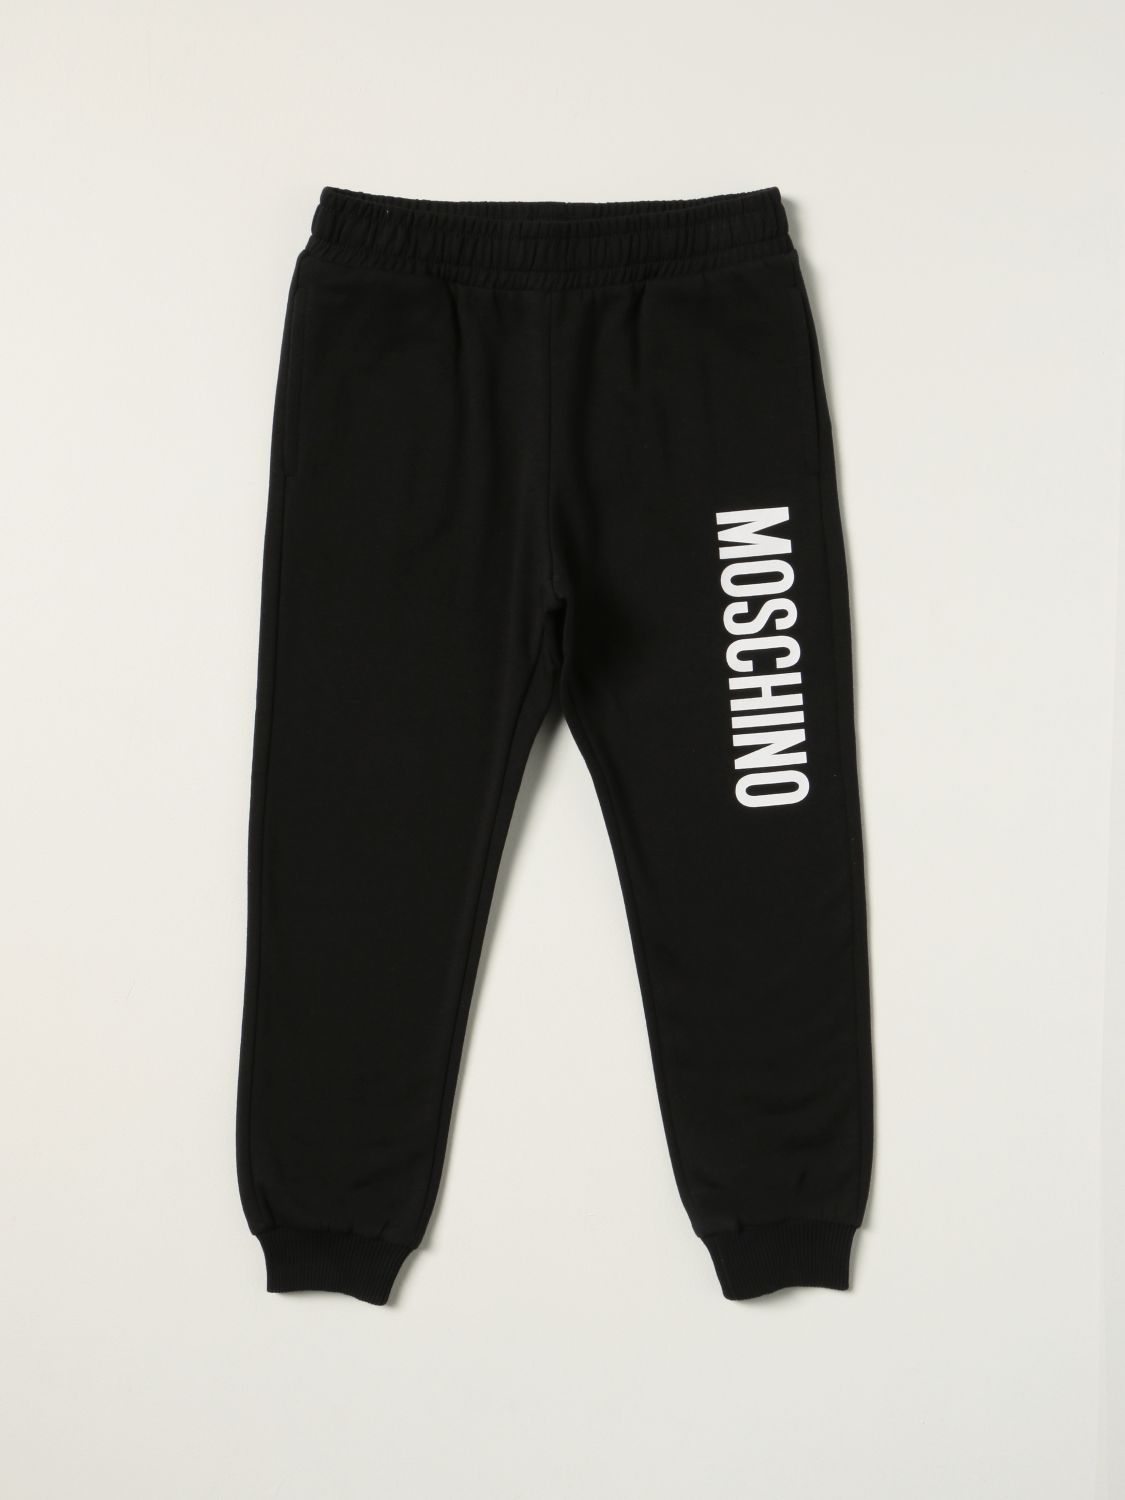 MOSCHINO KID: jogging pants with logo - Black | Moschino Kid pants ...